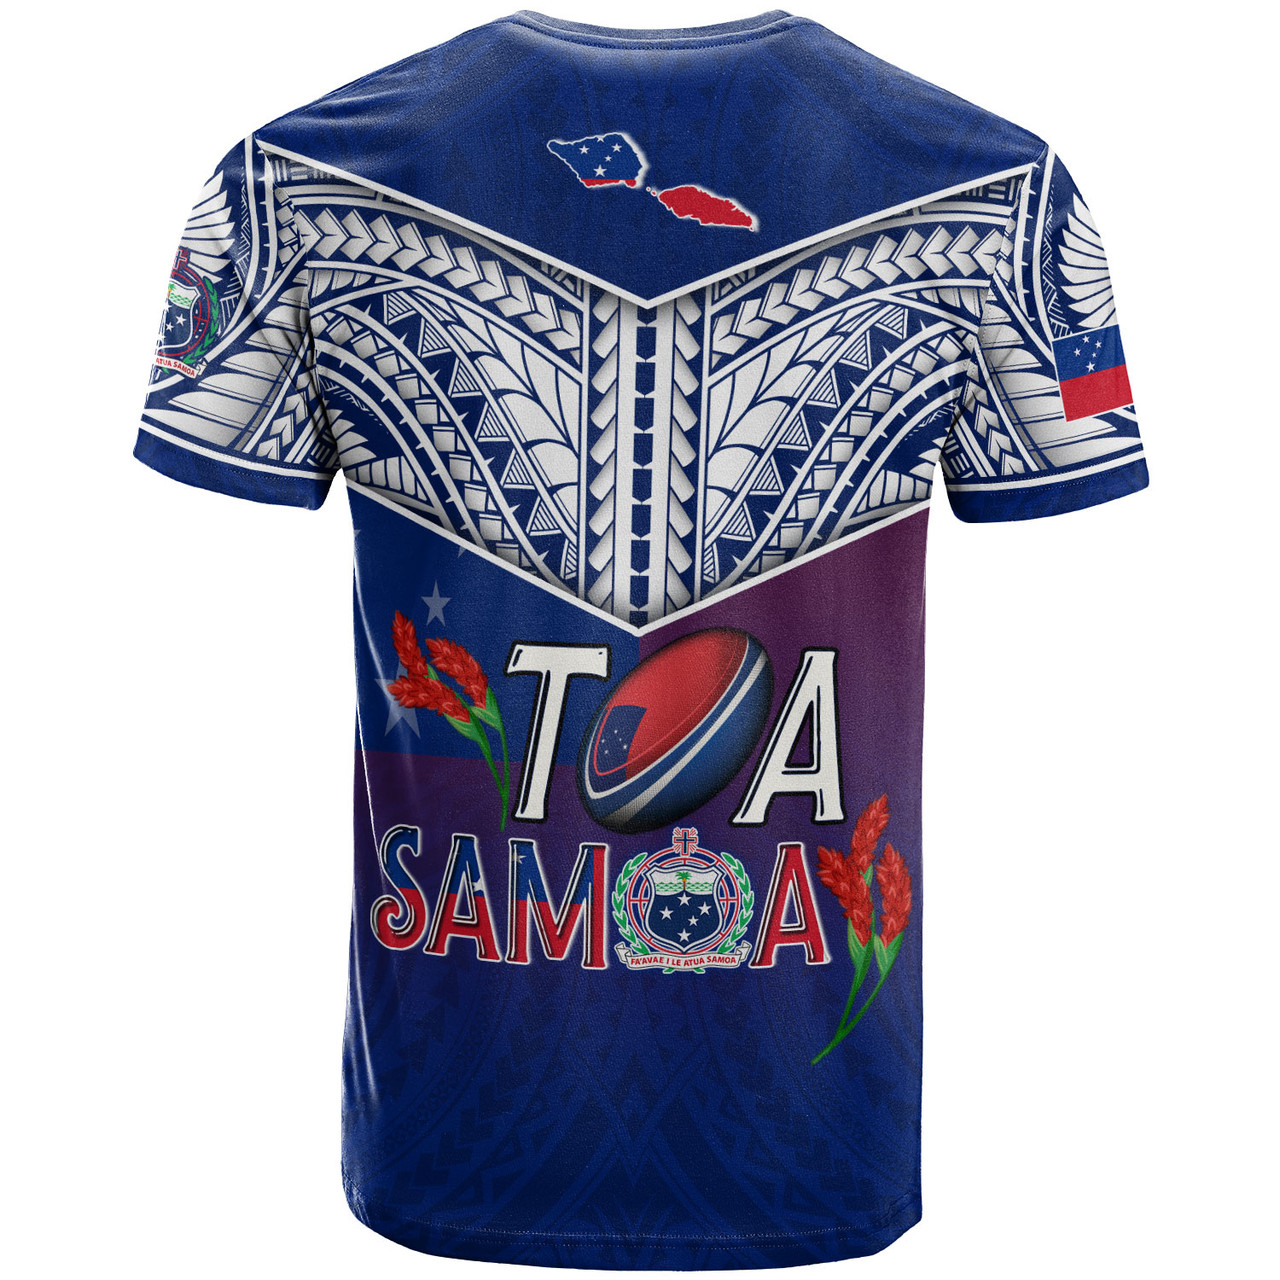 Samoa Custom Personalised T-Shirt Toa Samoa Teuilia Flowers Style